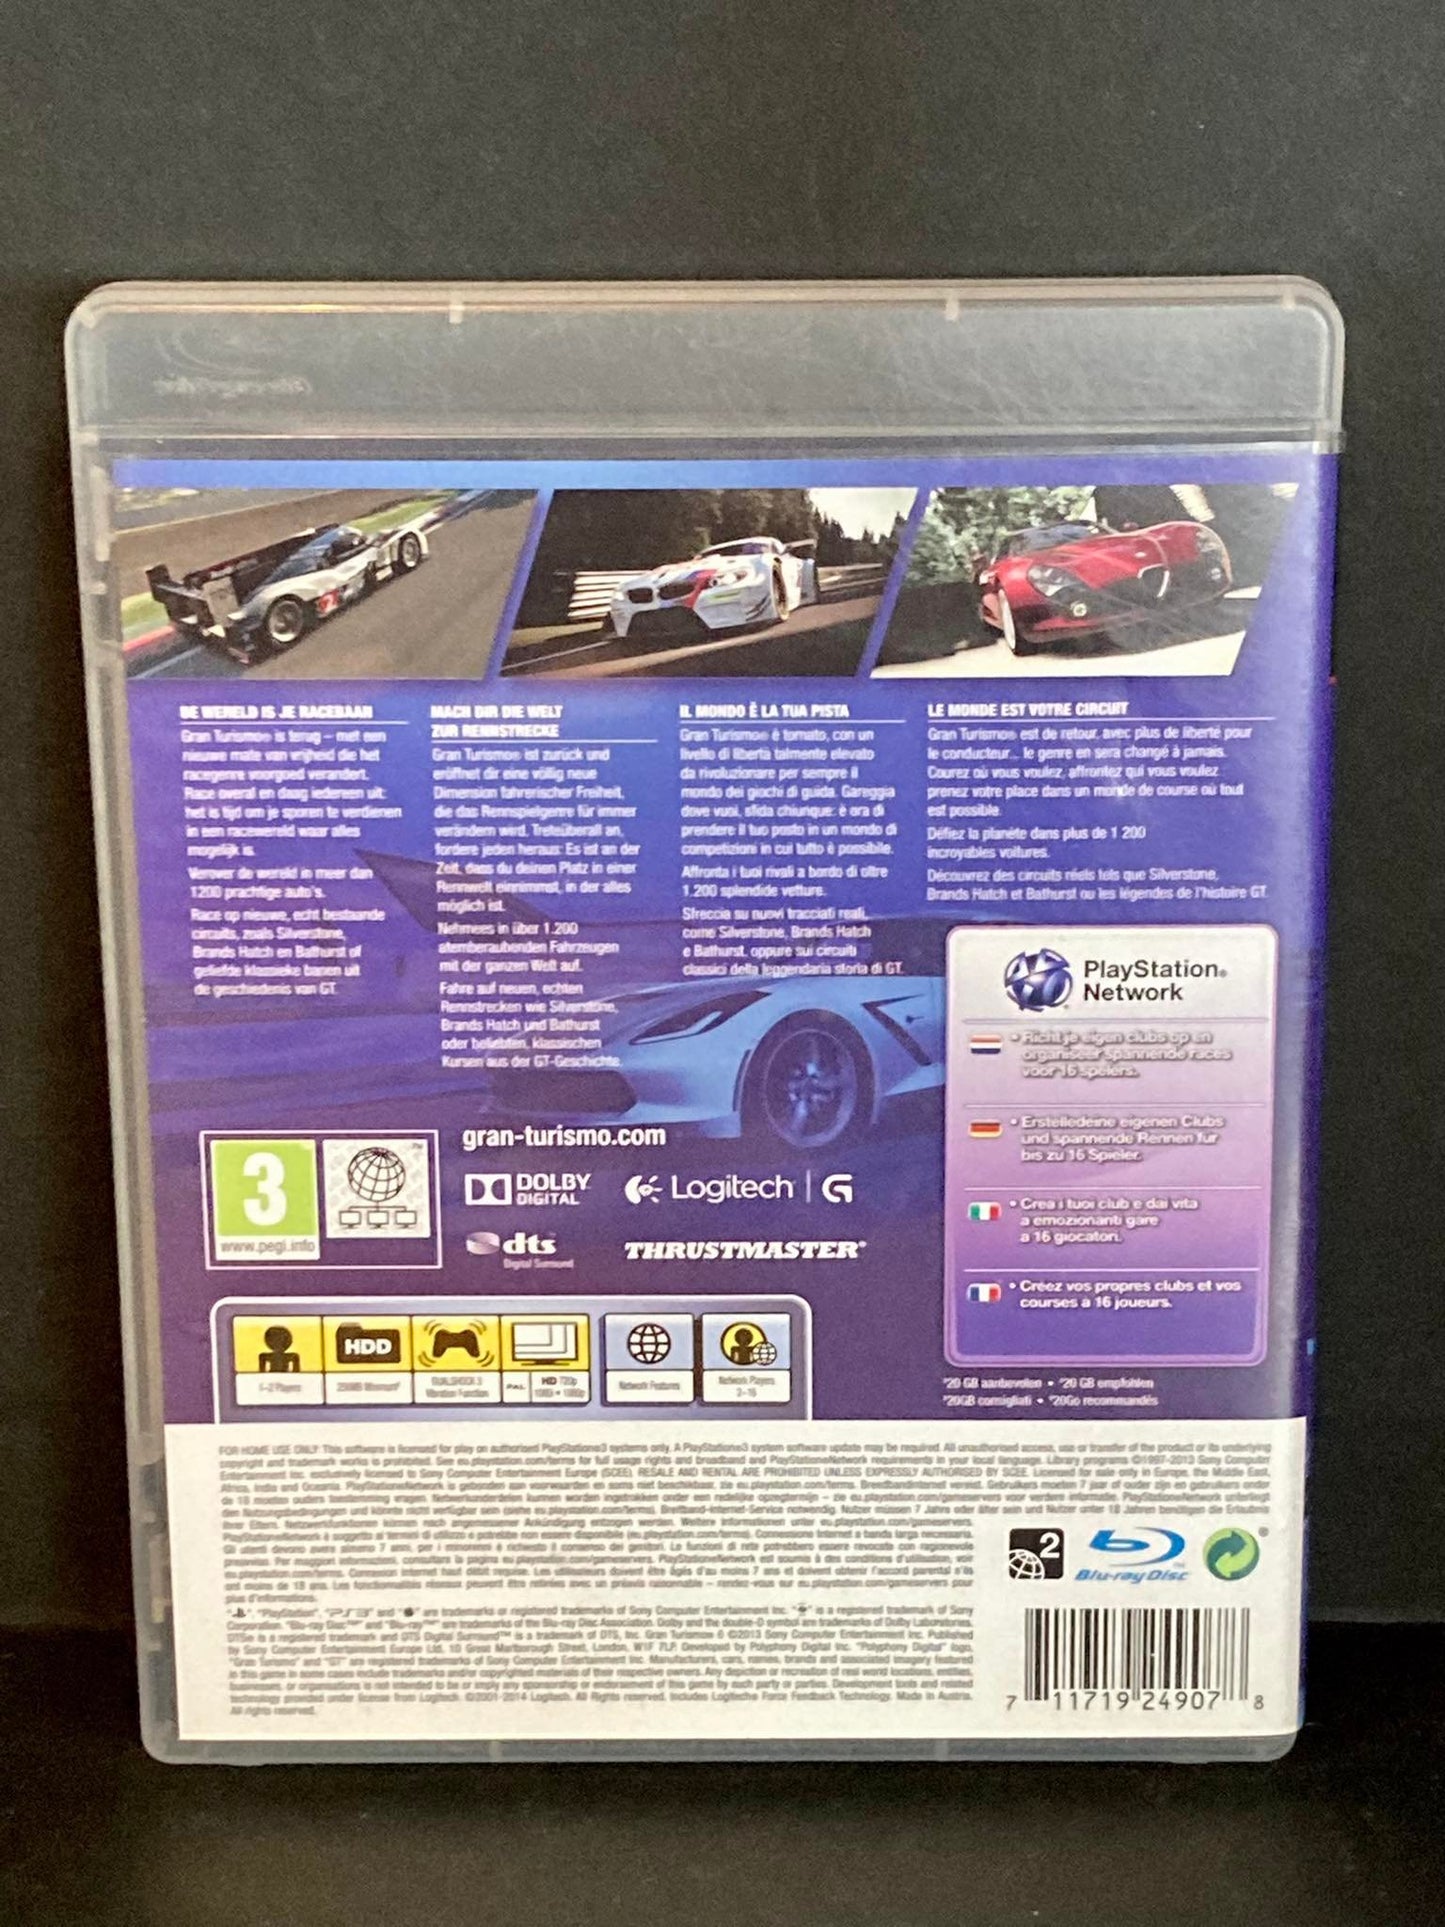 Gran Turismo 6 PS3 Game